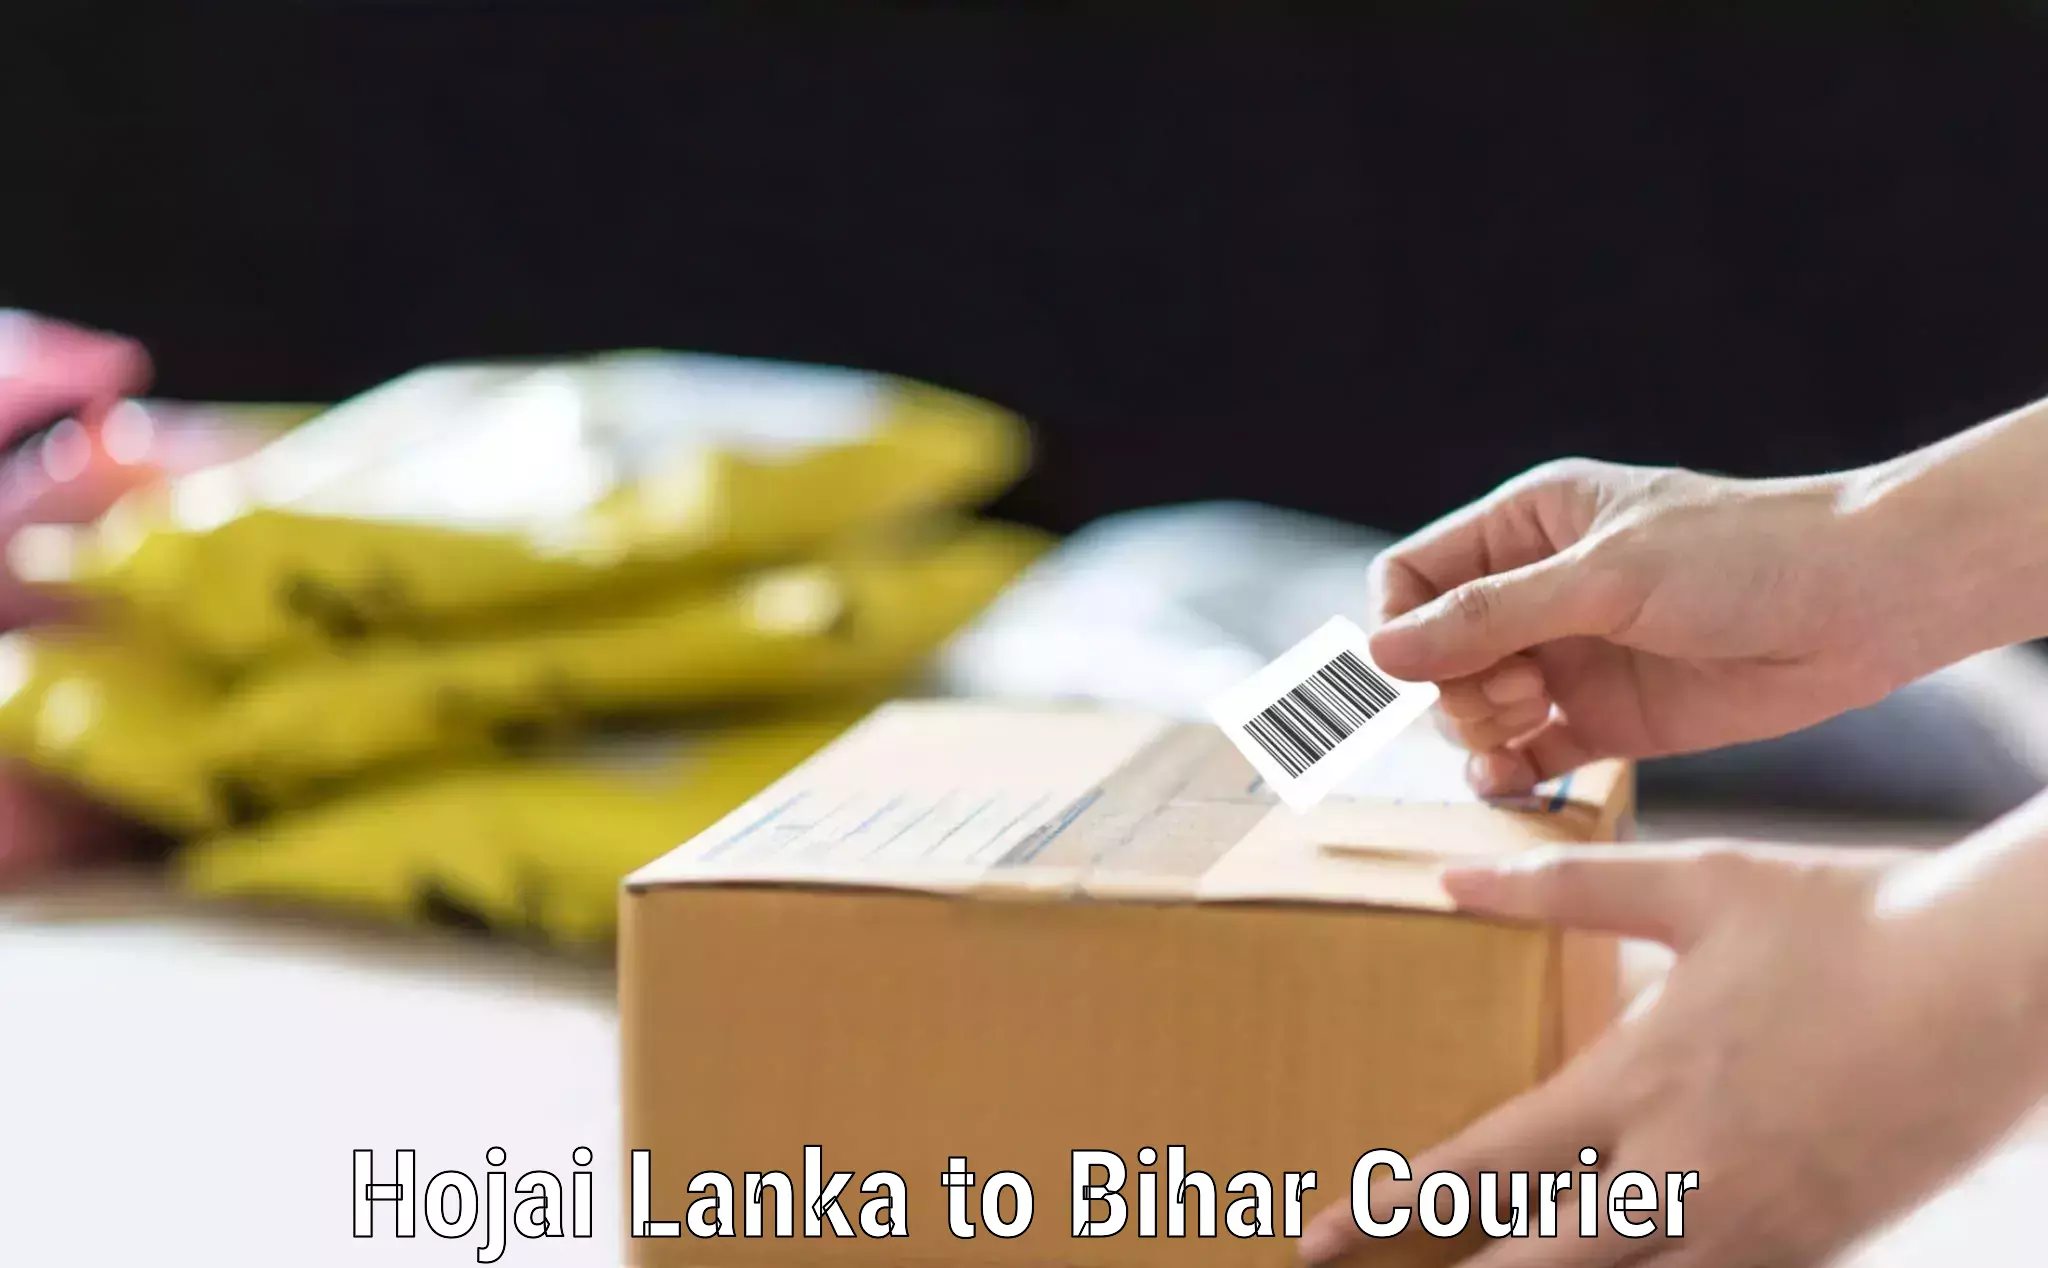 Luggage transfer service Hojai Lanka to Malmaliya